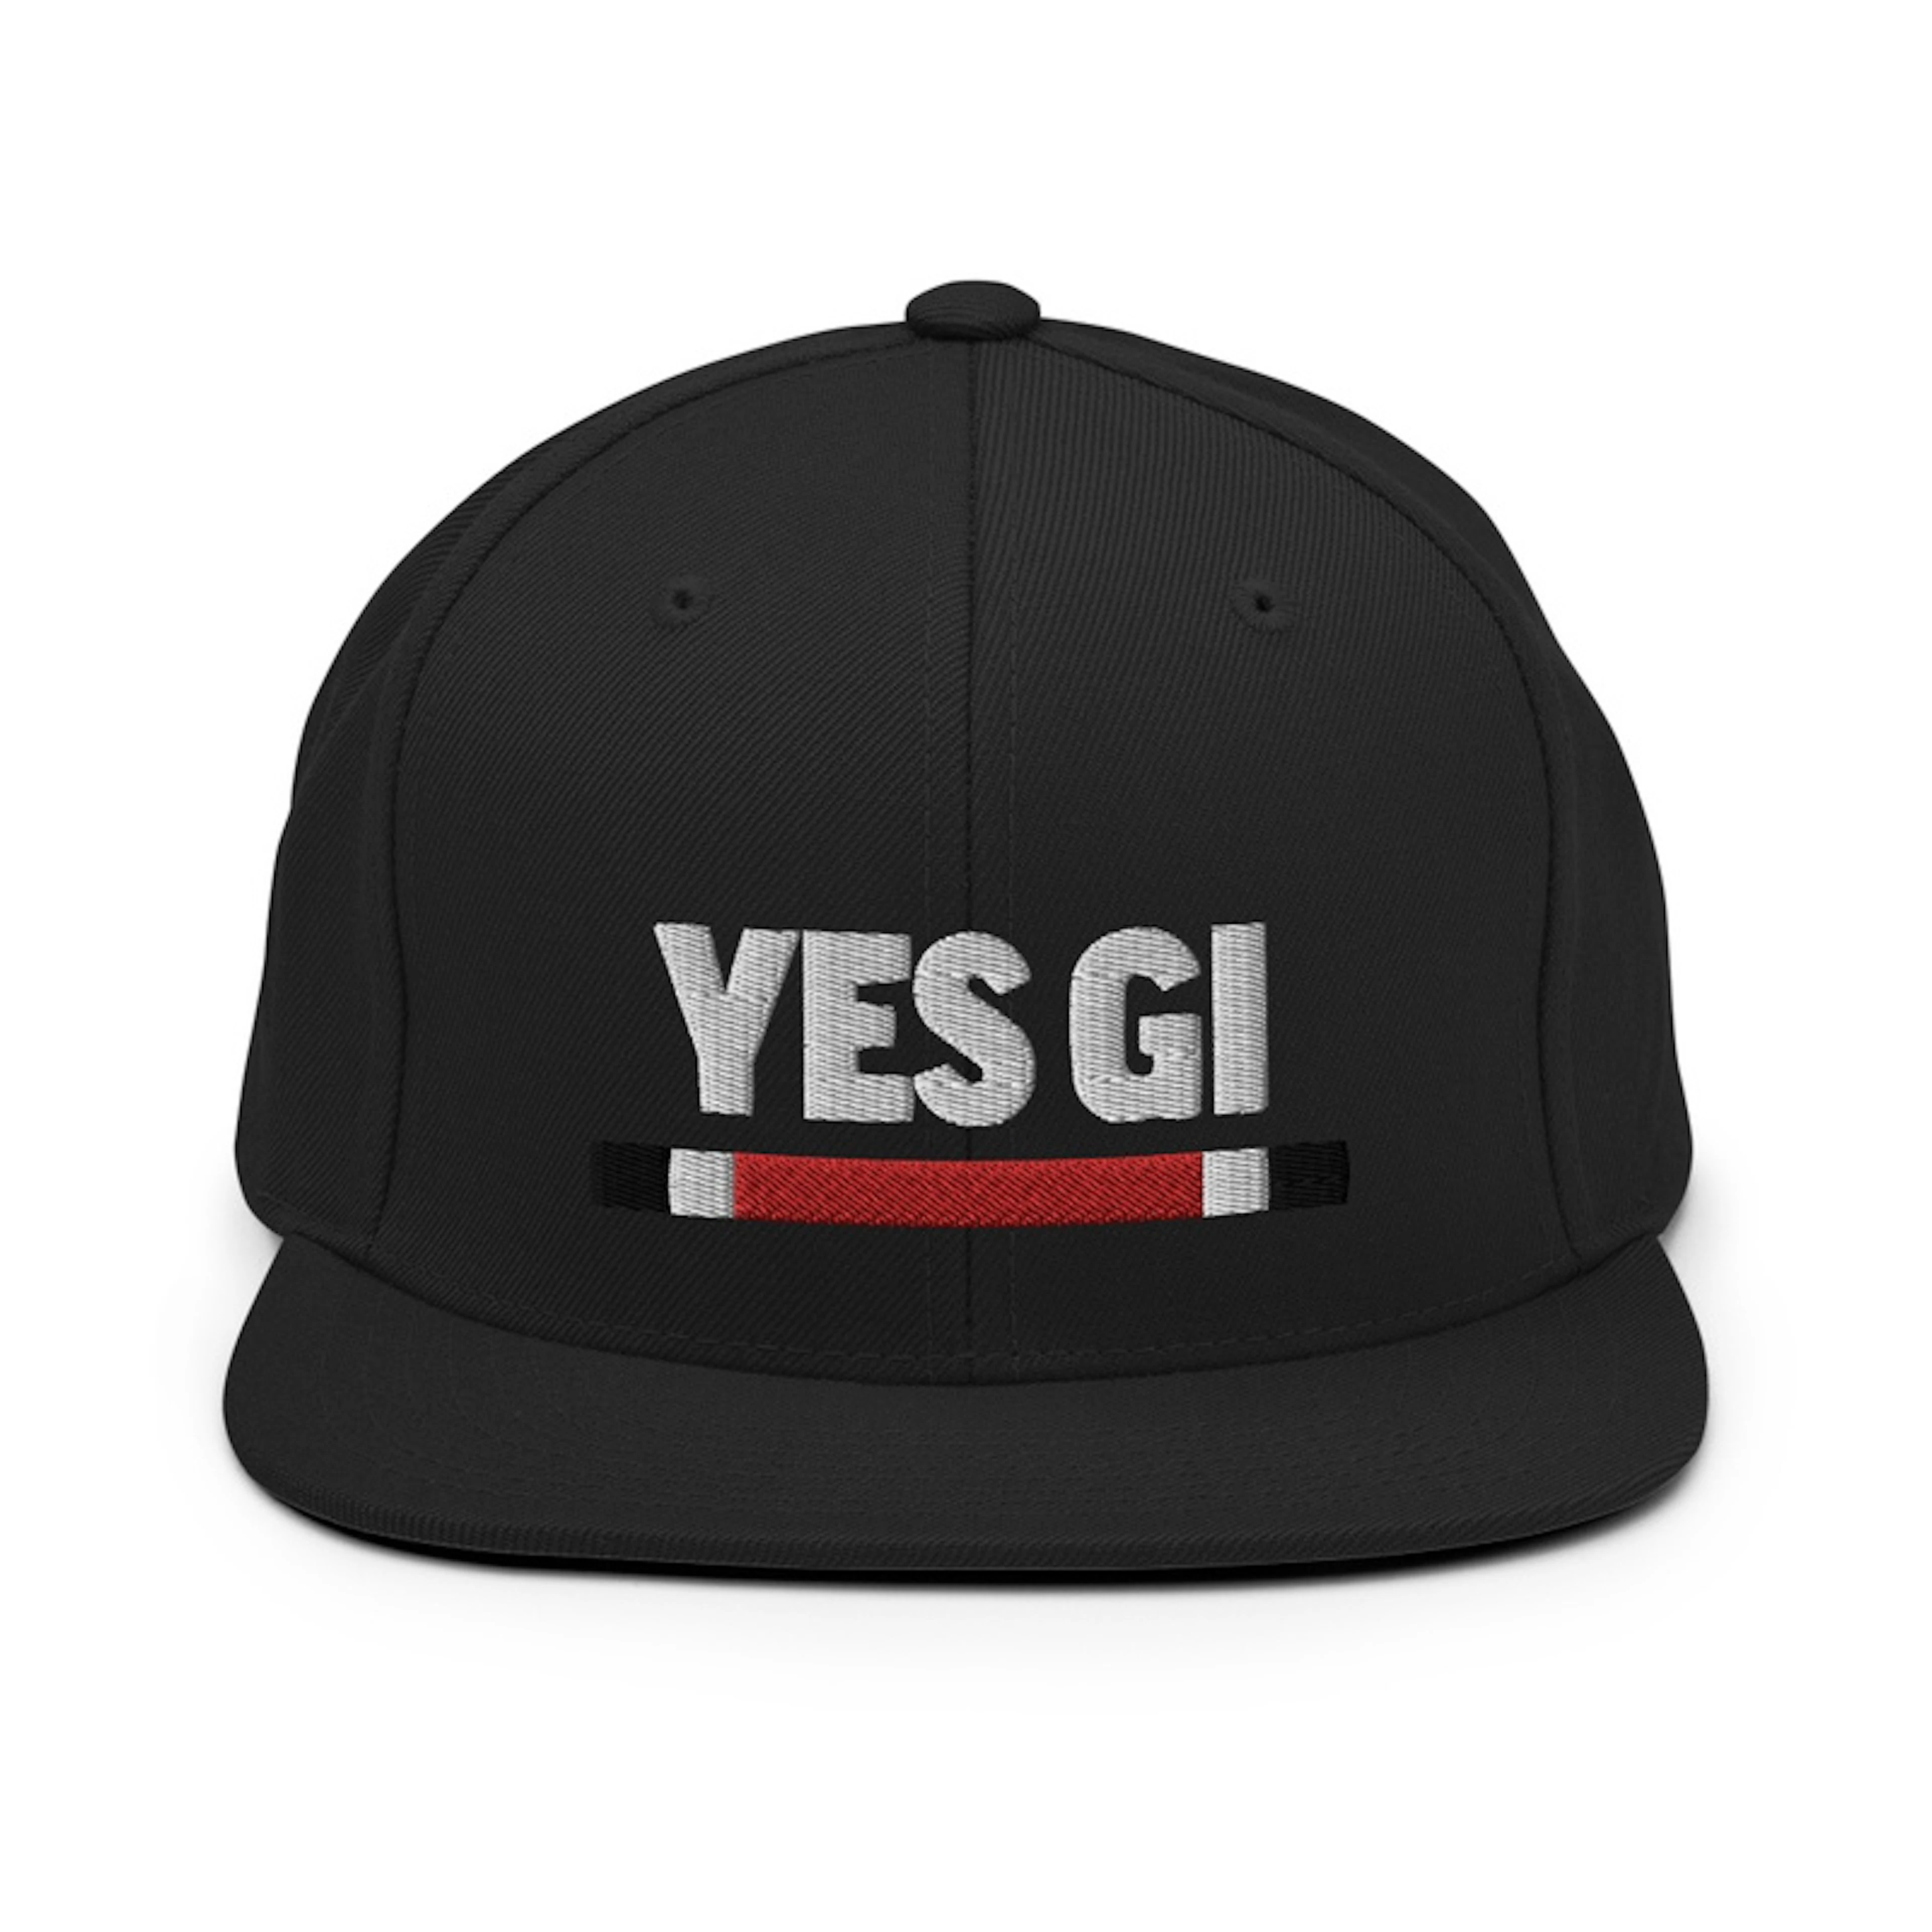 Yes Gi Snapback Hat